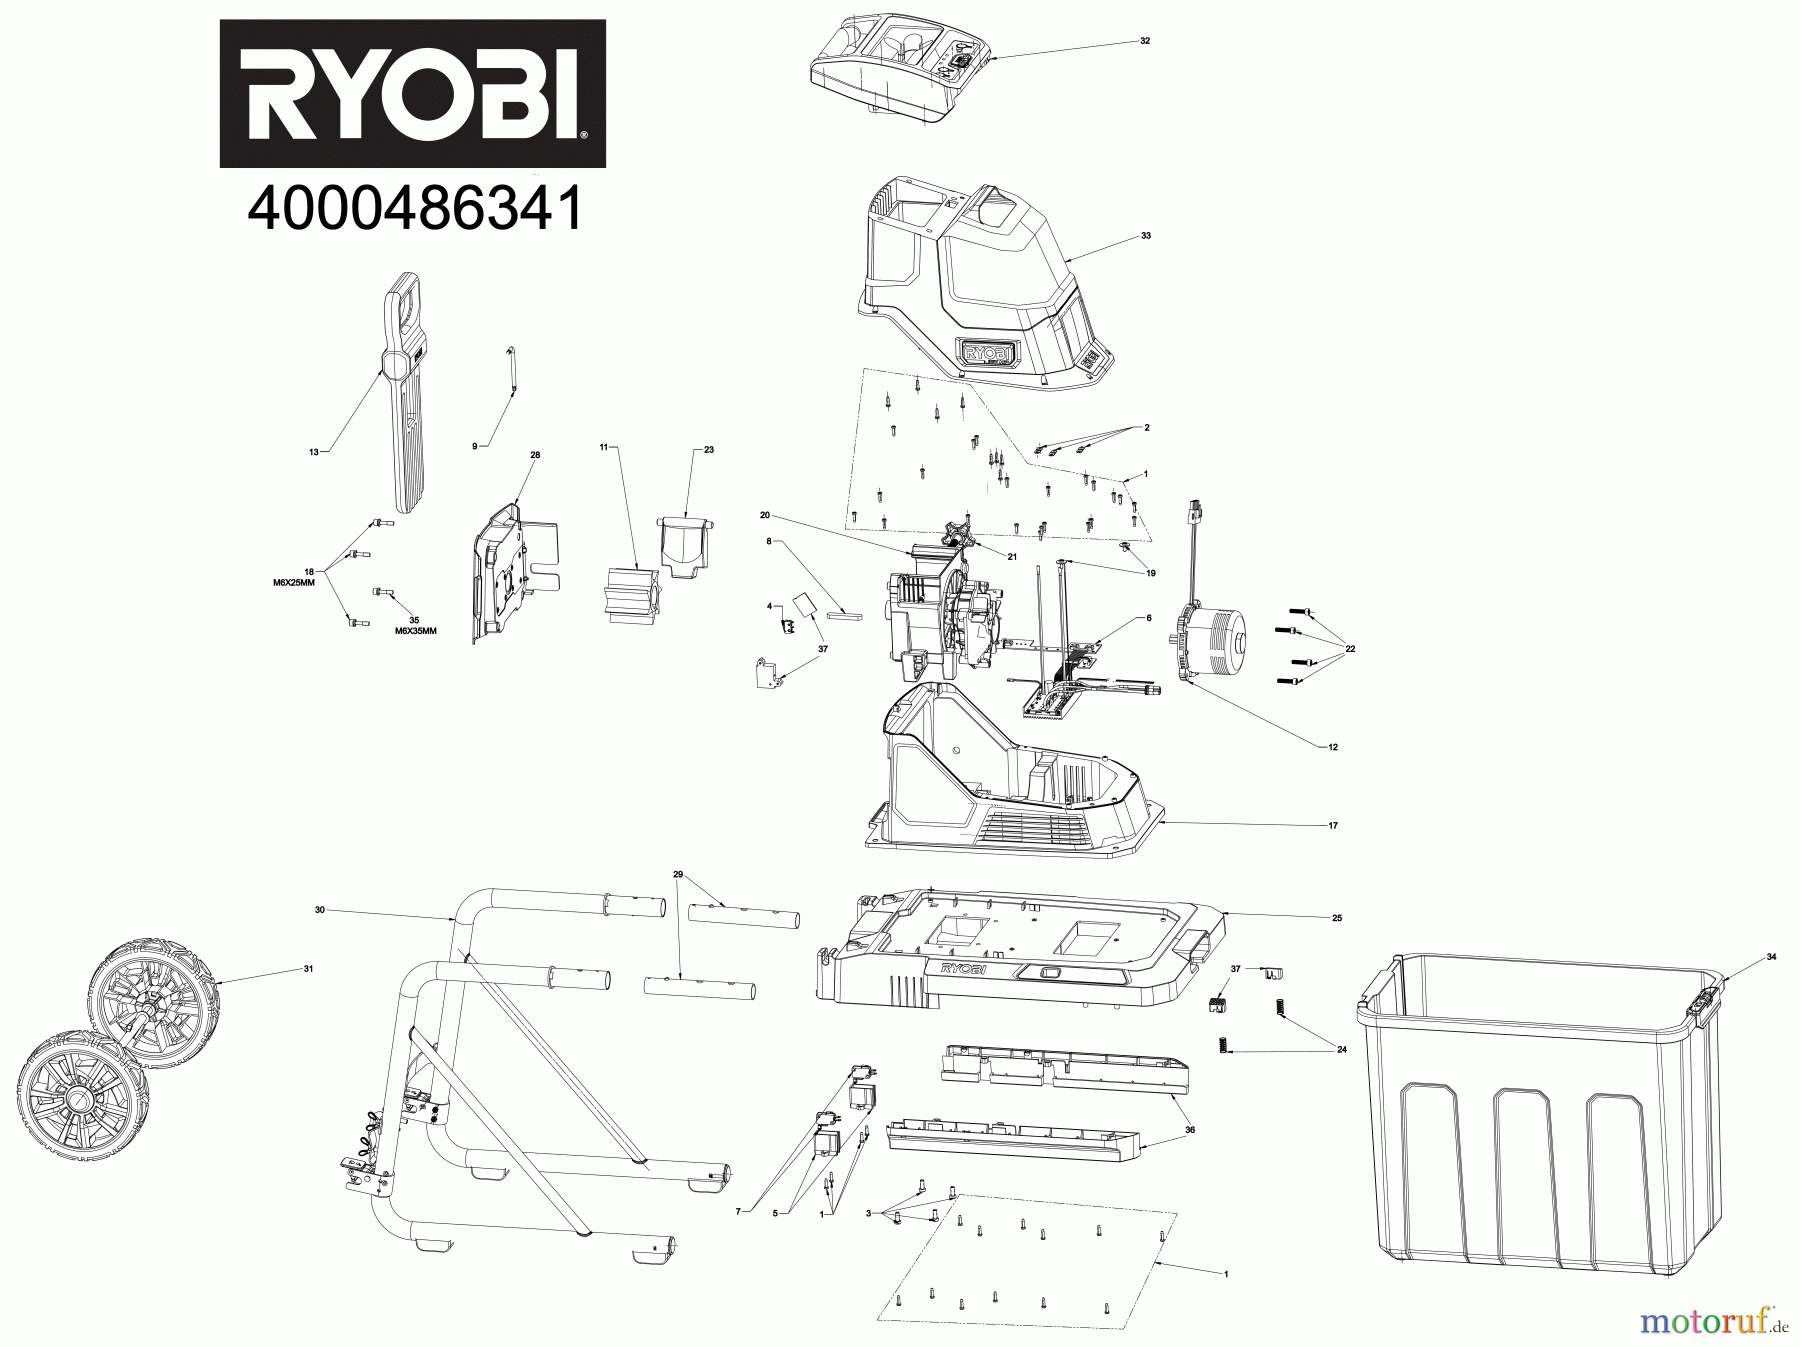  Ryobi Häcksler RY36SHX40 36 V MAX POWER Brushless Akku-Häcksler, Schnittkapazität 40 mm Seite 1